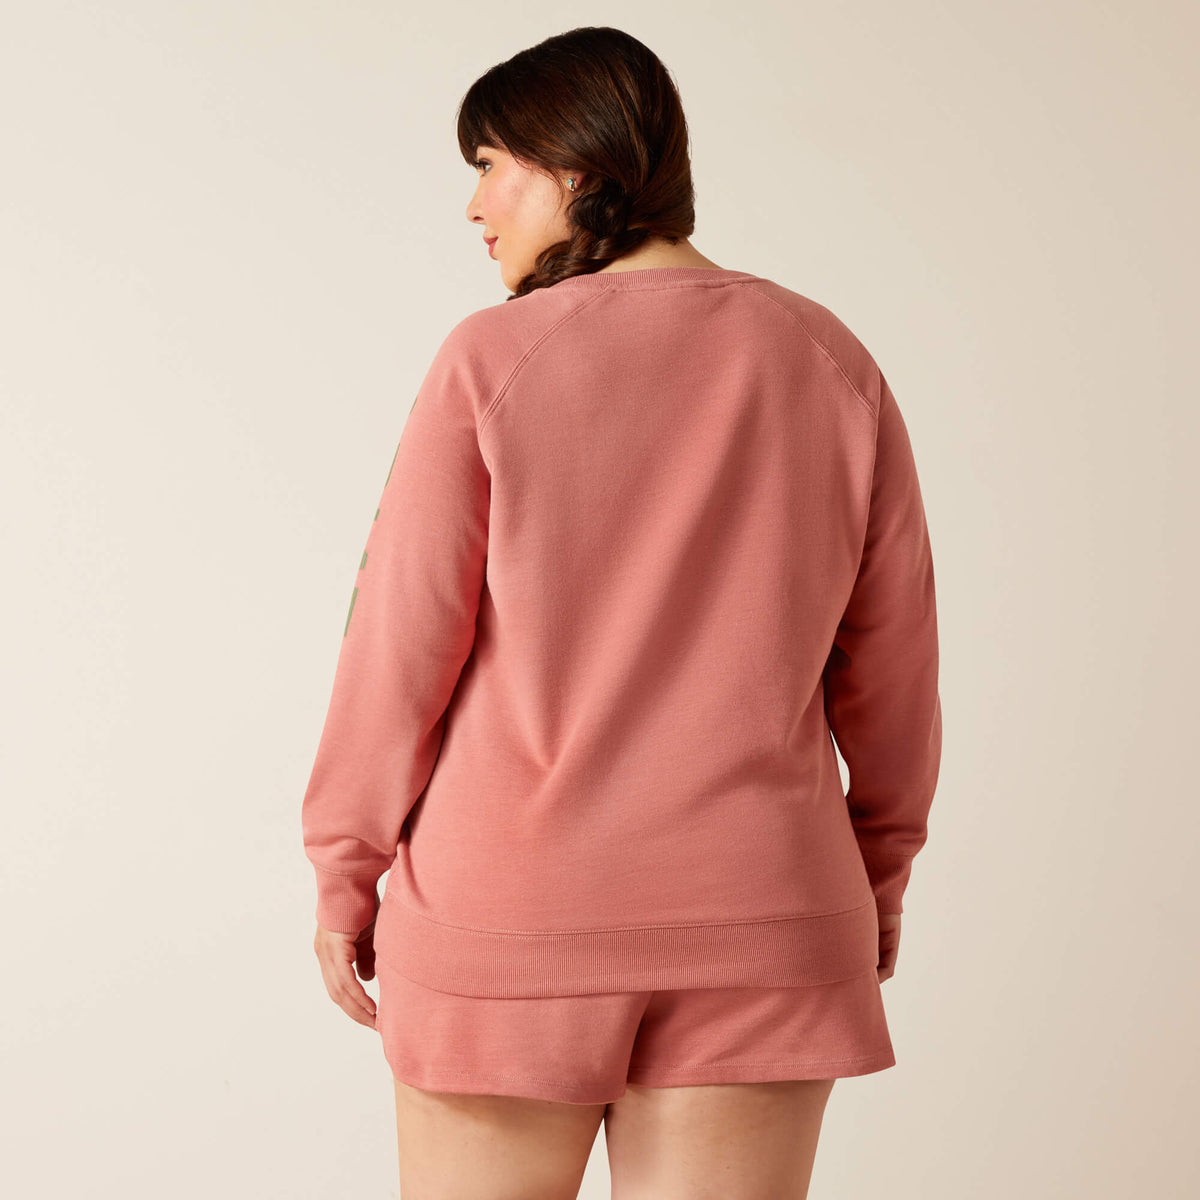 Ariat Women's Logo Sweatshirt in Dusty Rose (Available in Regular & Plus Sizes)